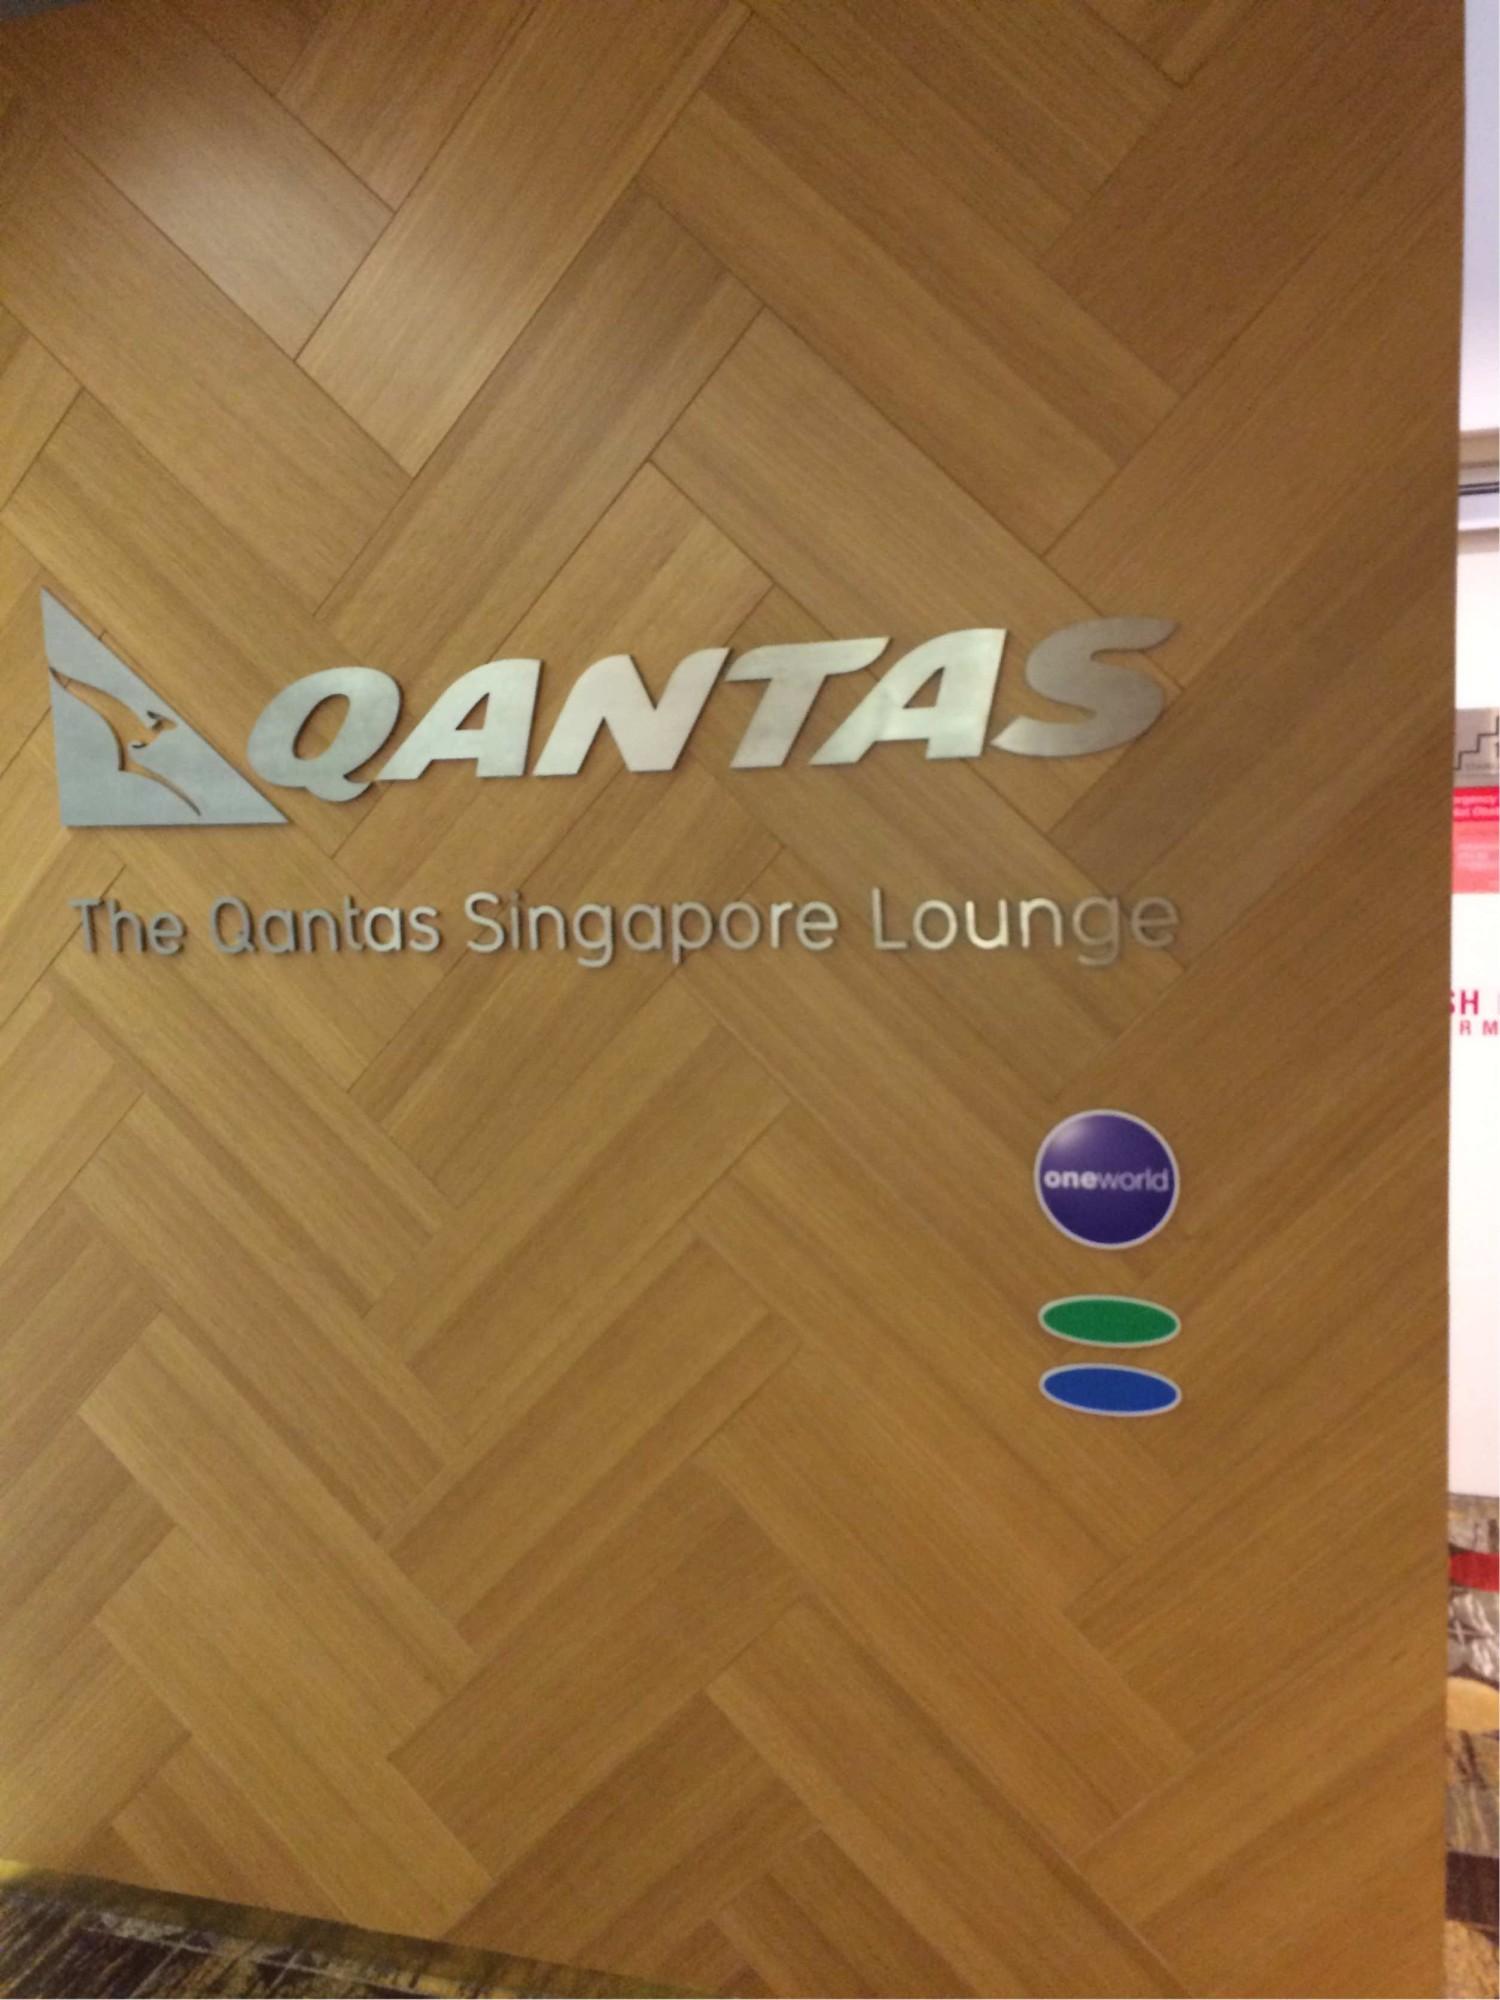 The Qantas Singapore Lounge image 44 of 49